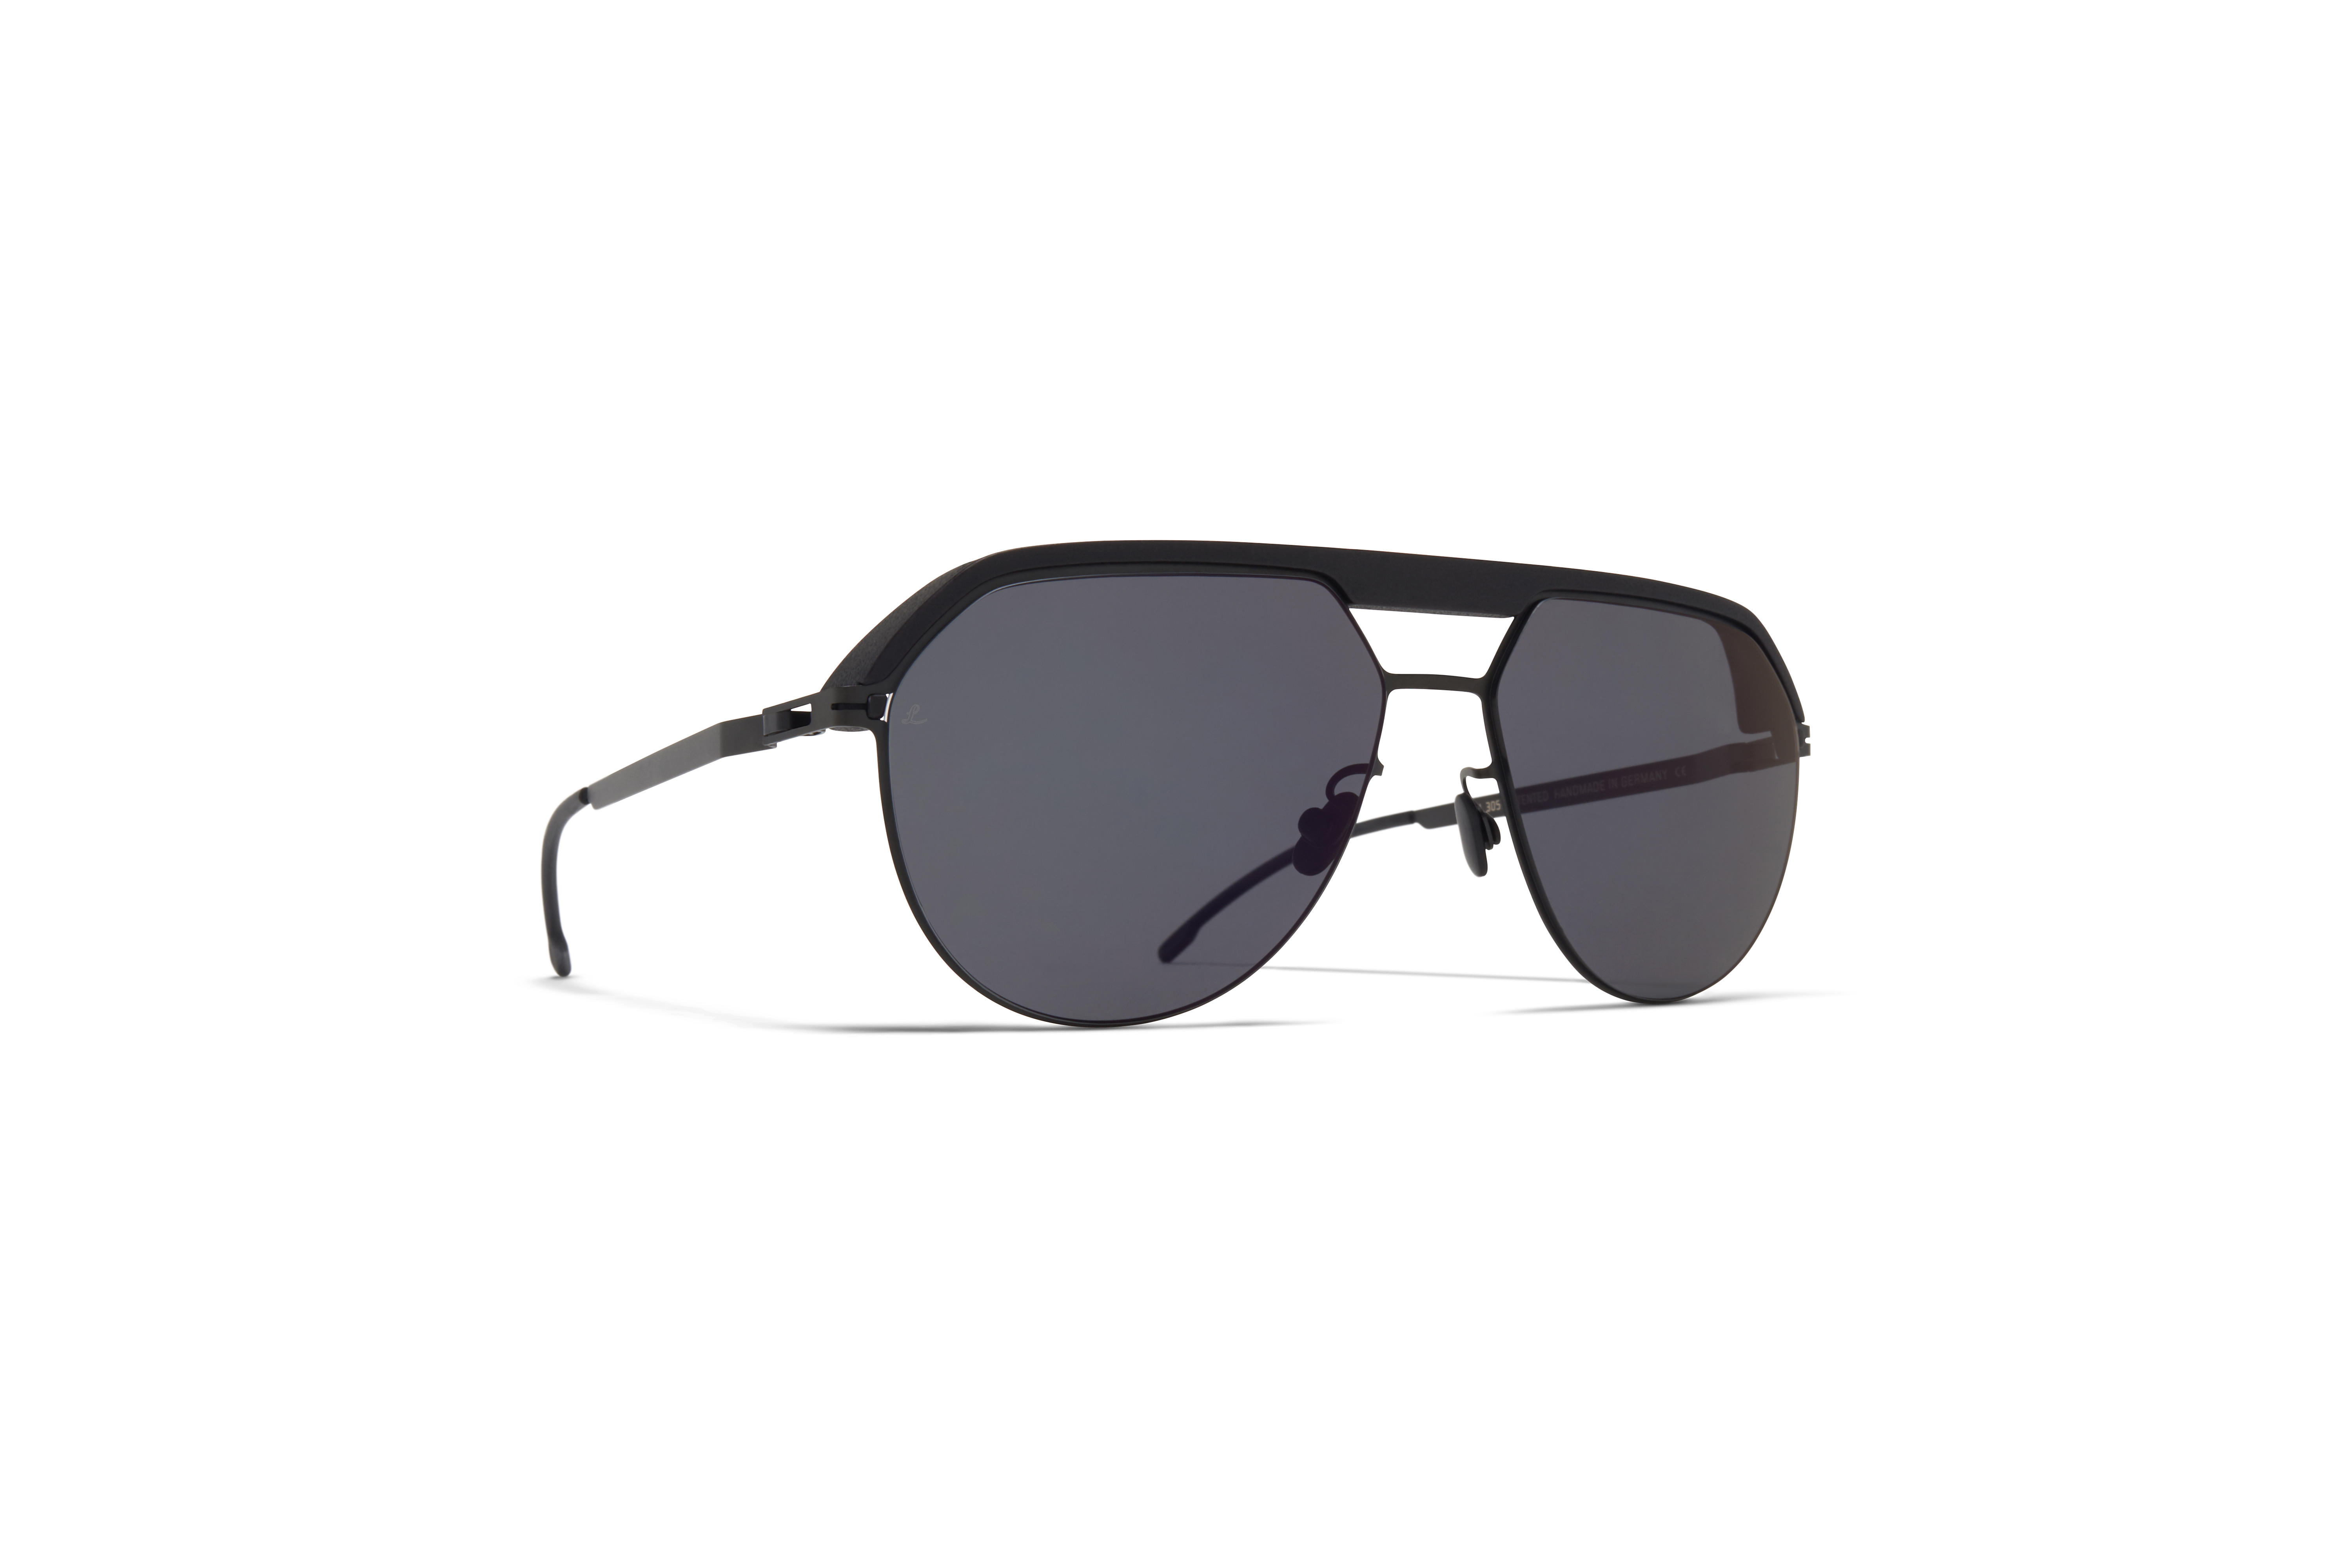 pitch black aviator sunglasses